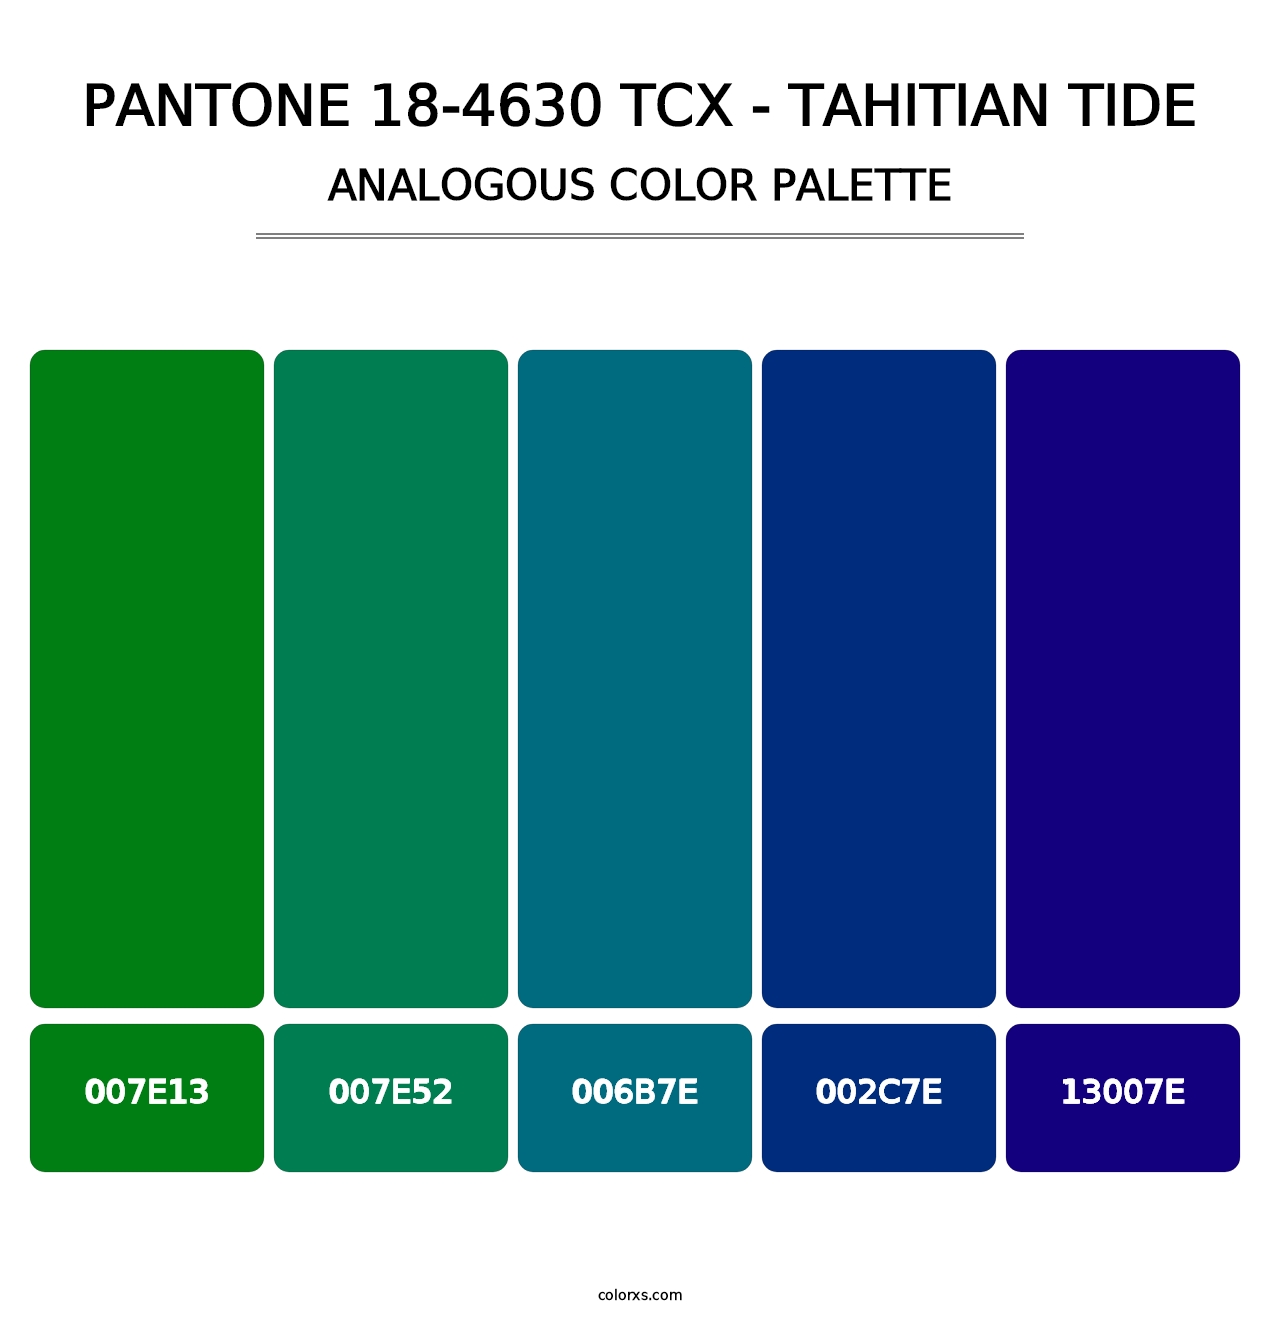 PANTONE 18-4630 TCX - Tahitian Tide - Analogous Color Palette